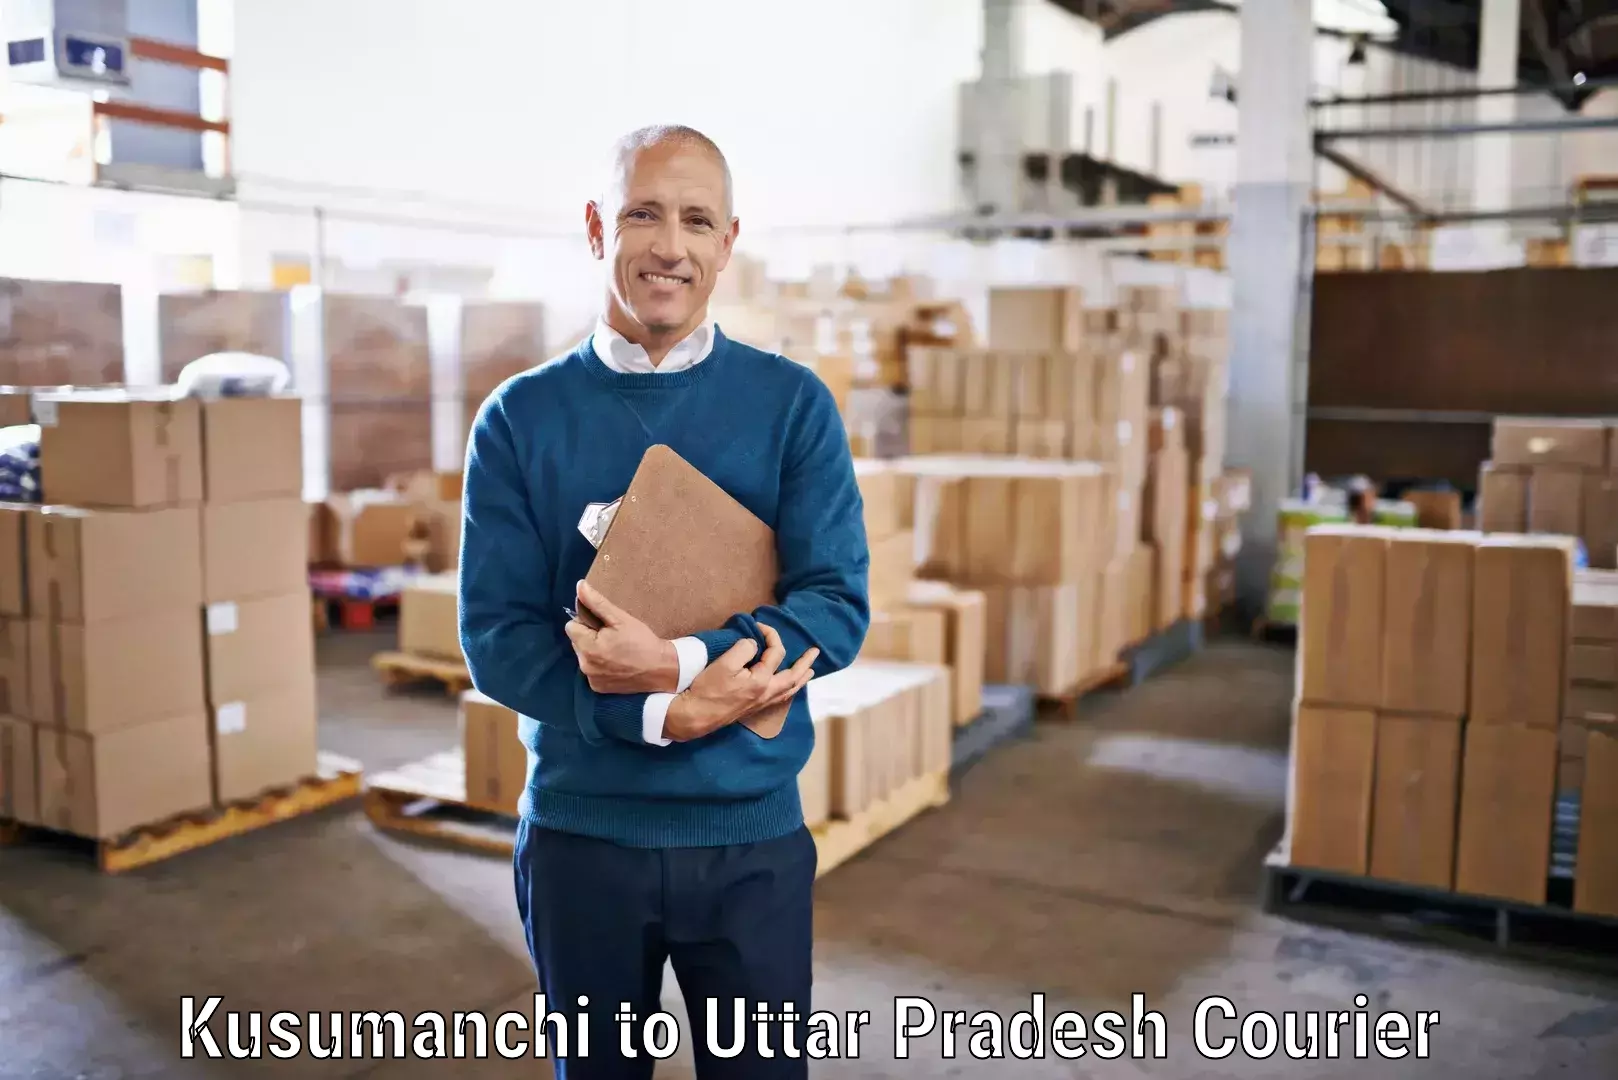 Professional courier handling Kusumanchi to Varanasi